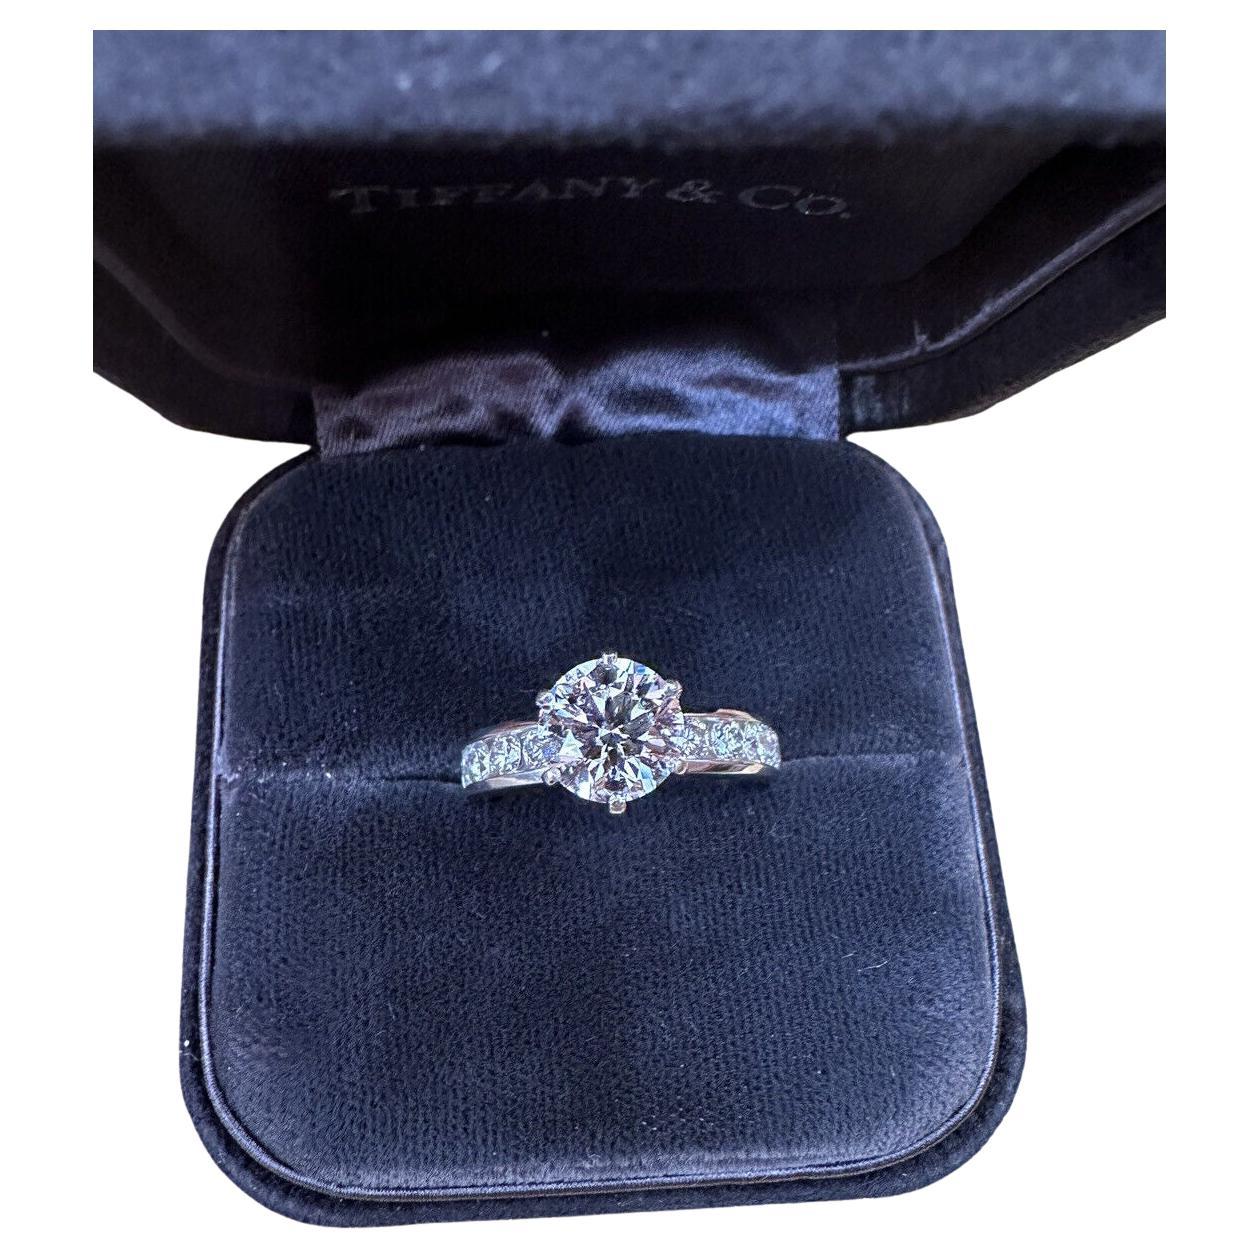 Tiffany & Co. 2.01 Carat Center F-VVS1 Round Brilliant Diamond Ring in Platinum